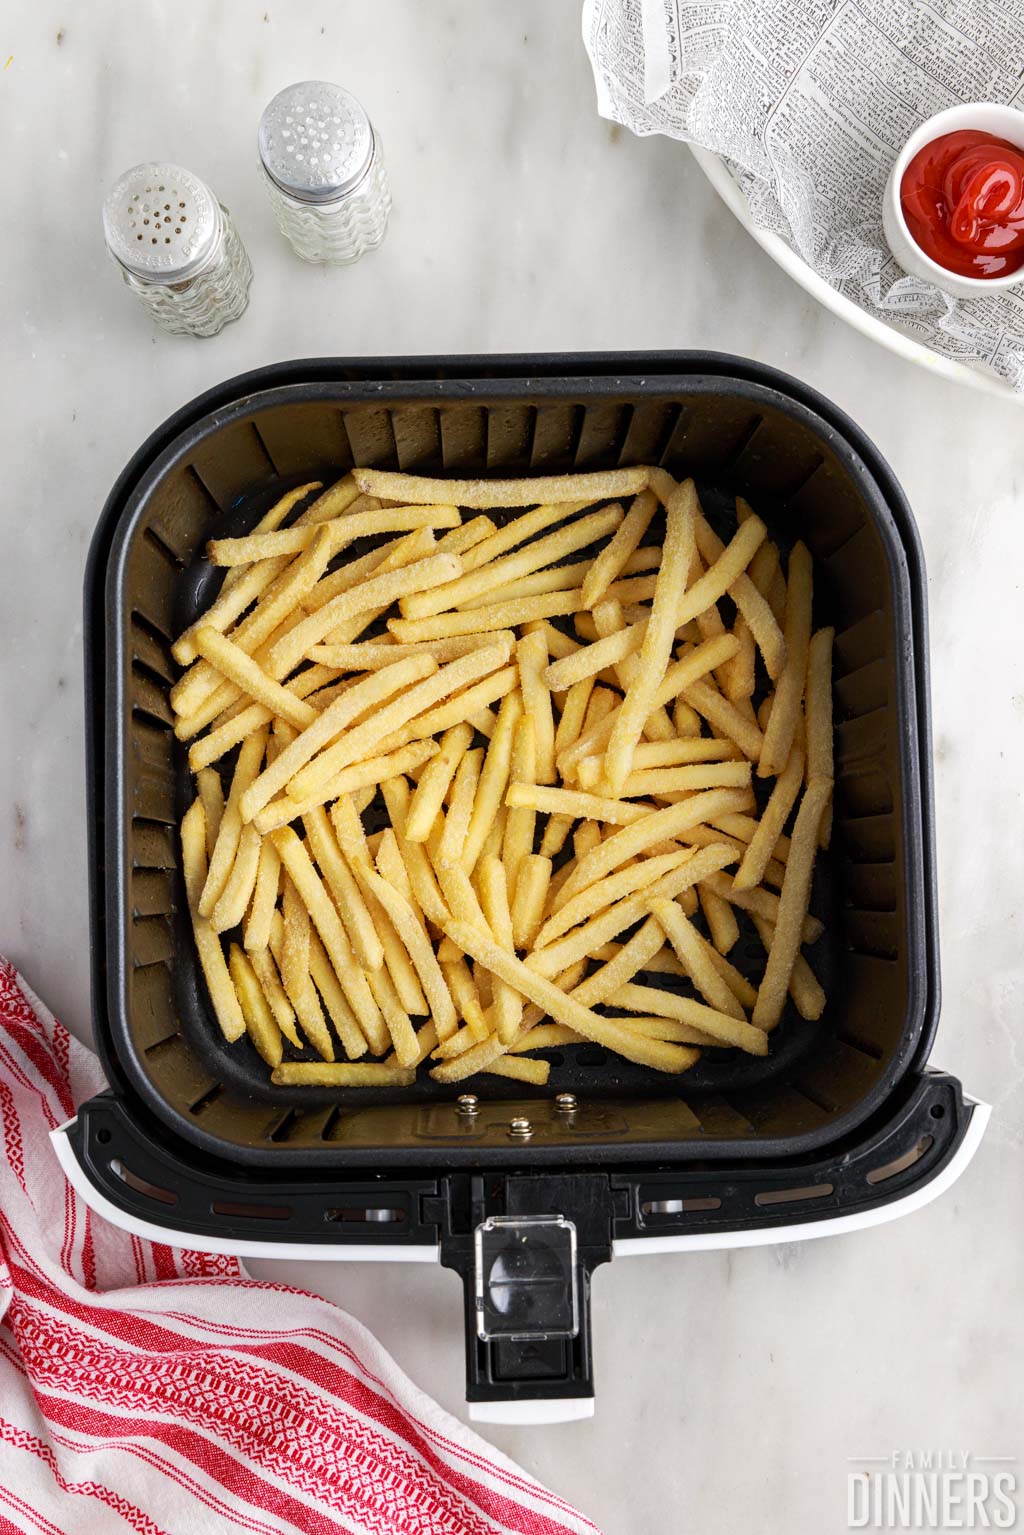 frozen french fries in air fryer.